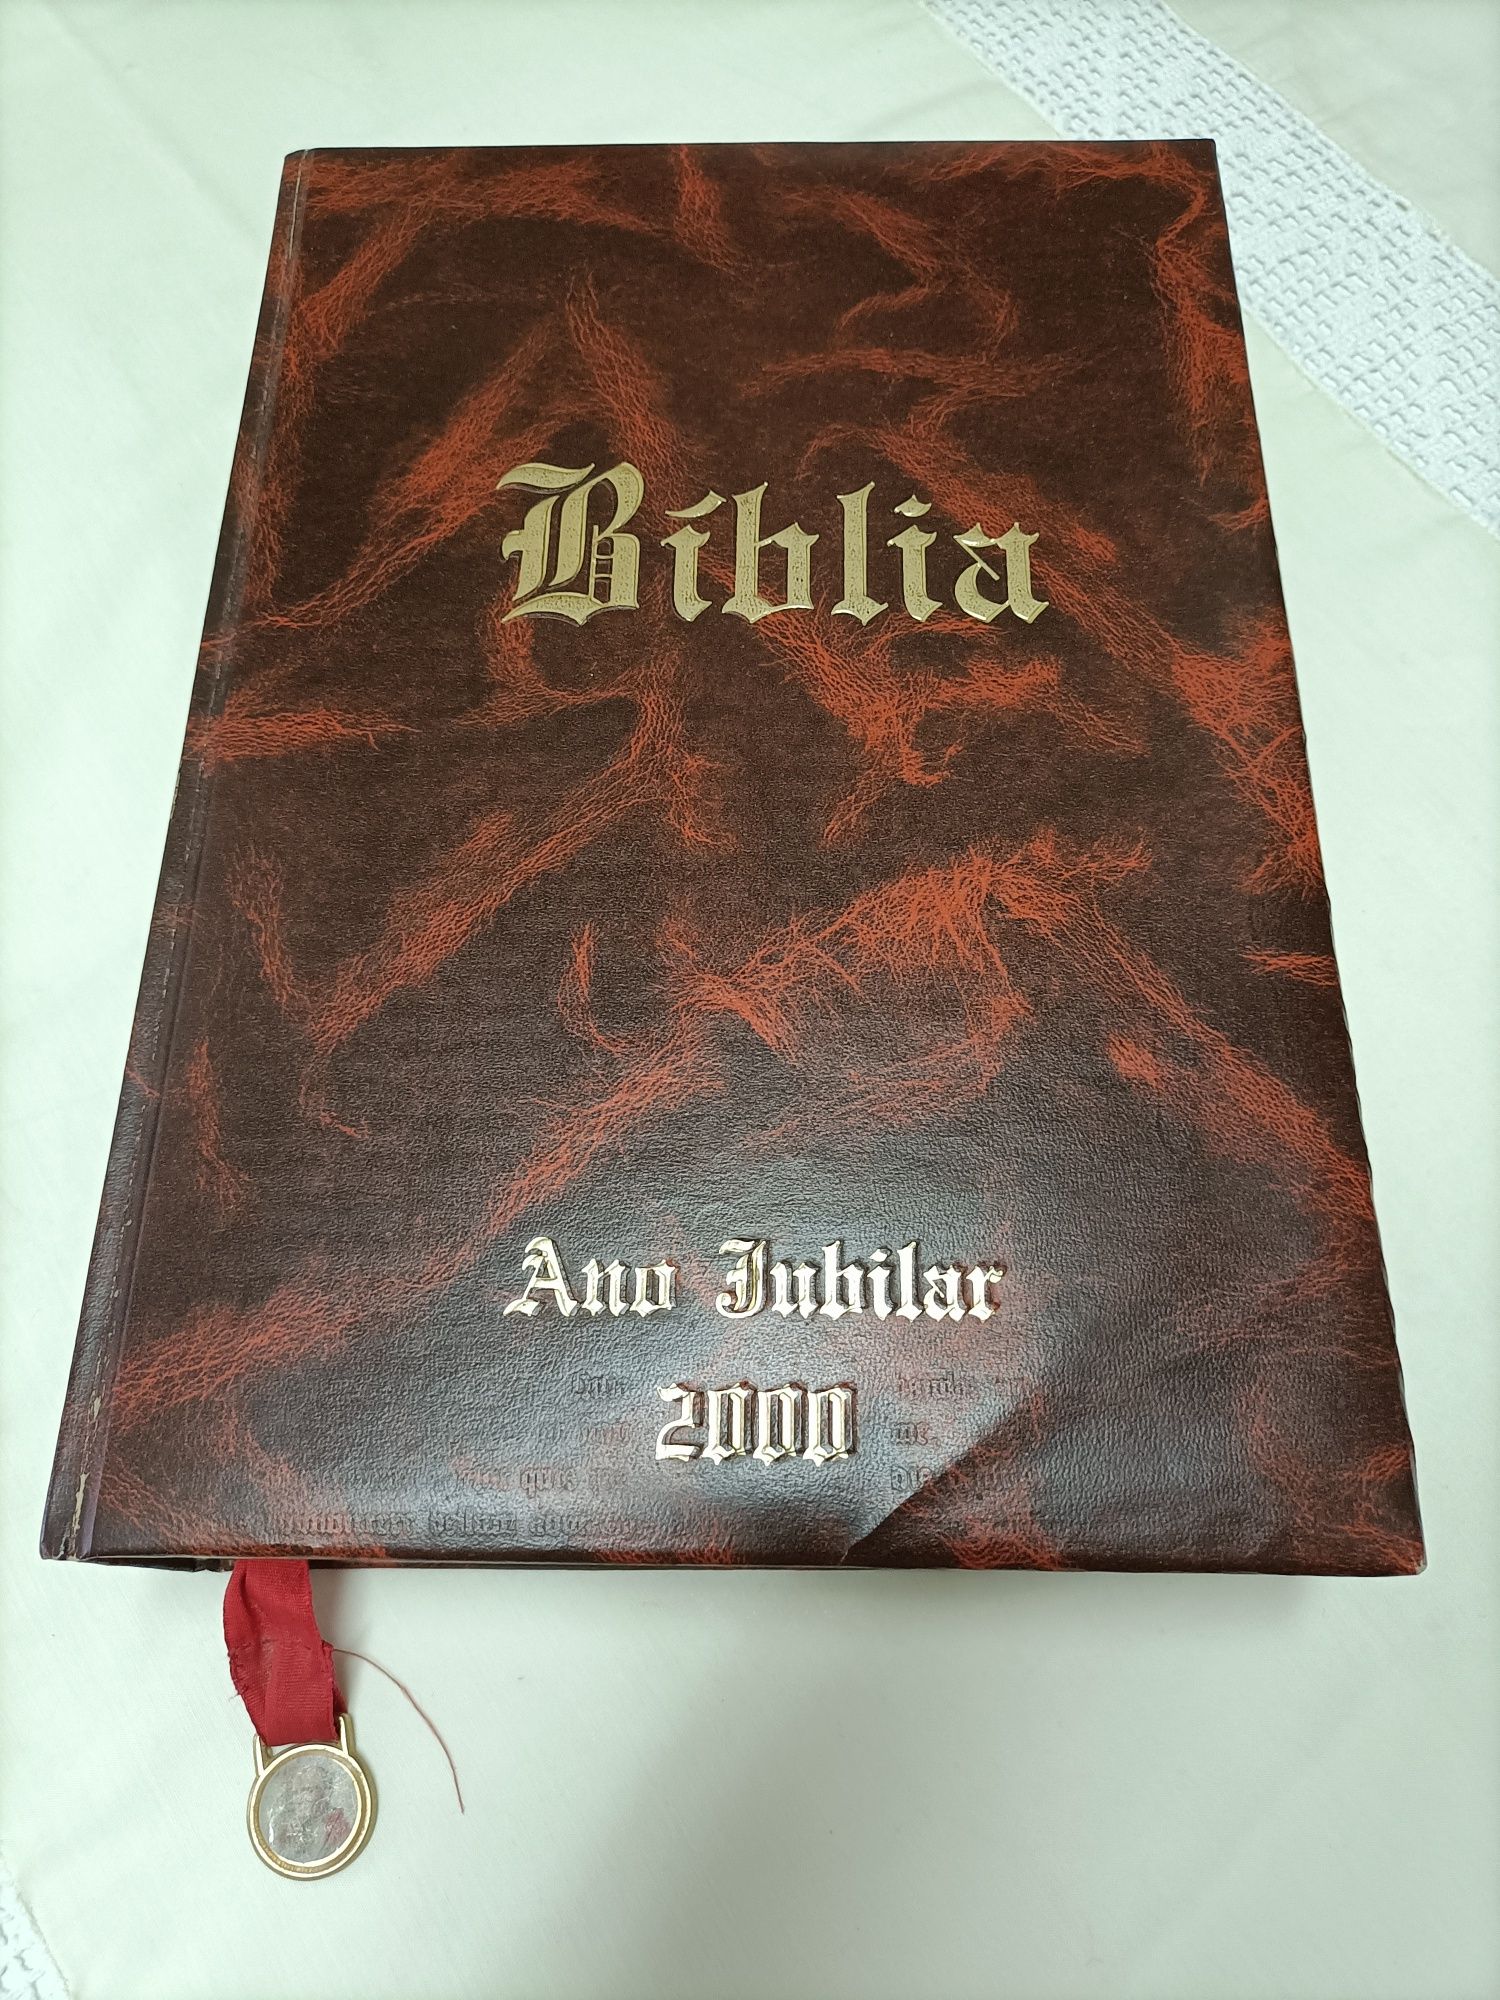 Bíblia Sagrada Ano Jubilar 2000